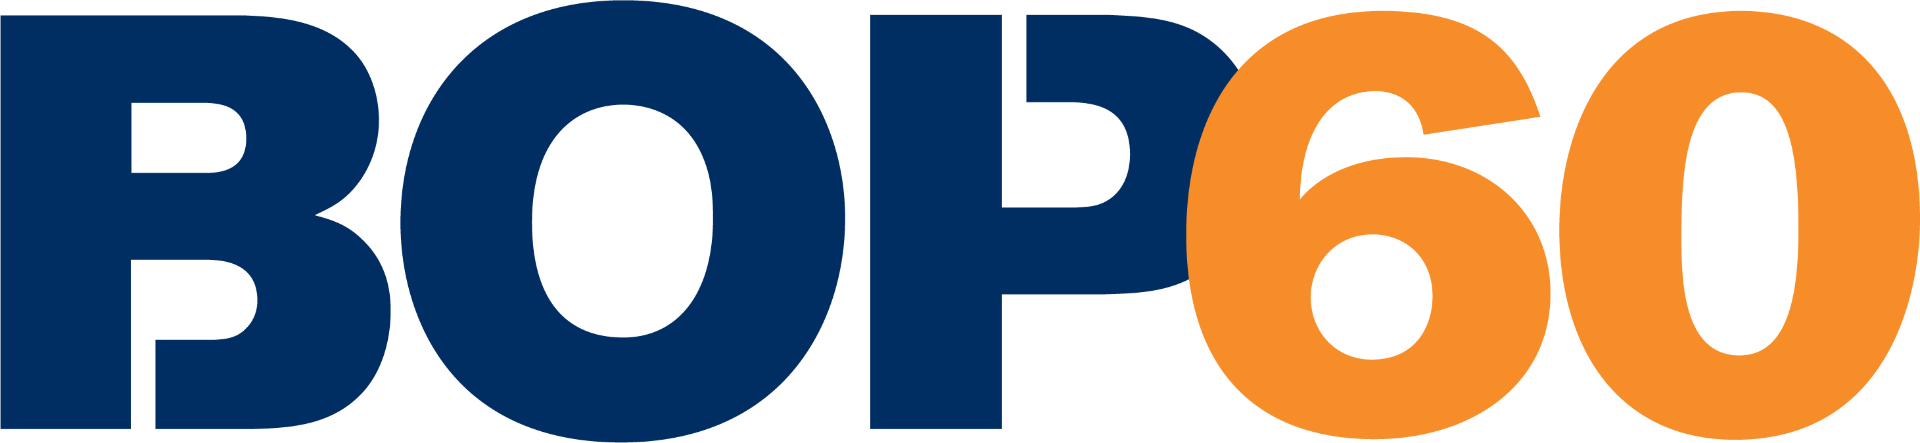 bop60 logo